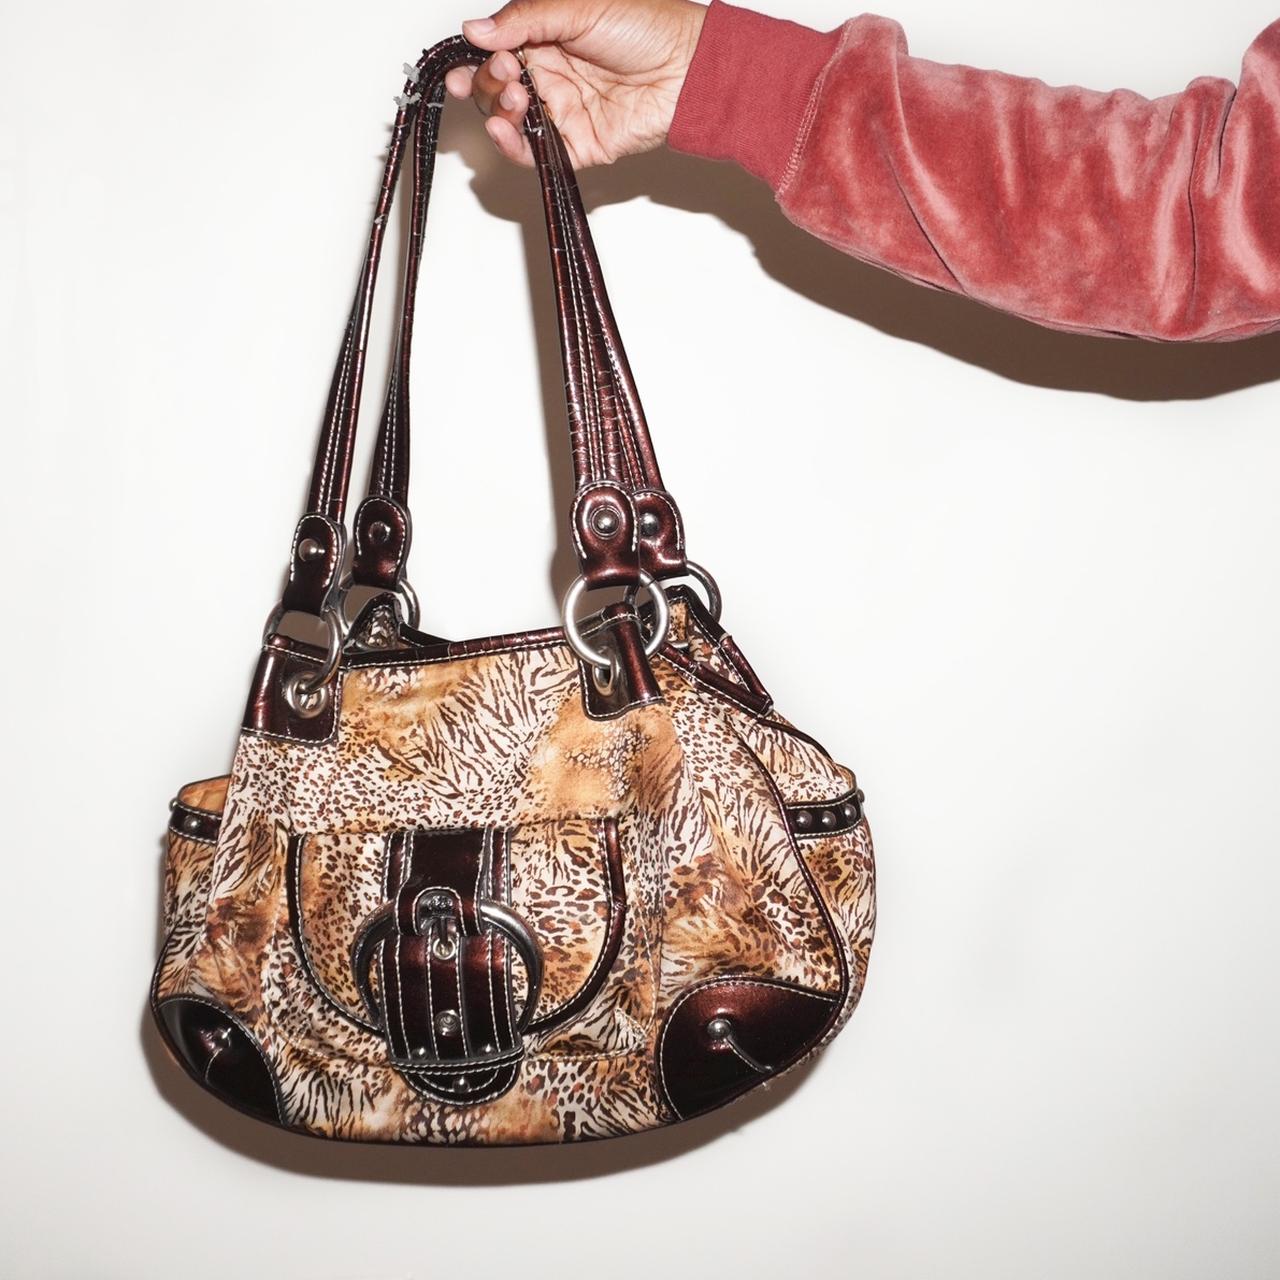 kathy ireland Handbags | Mercari